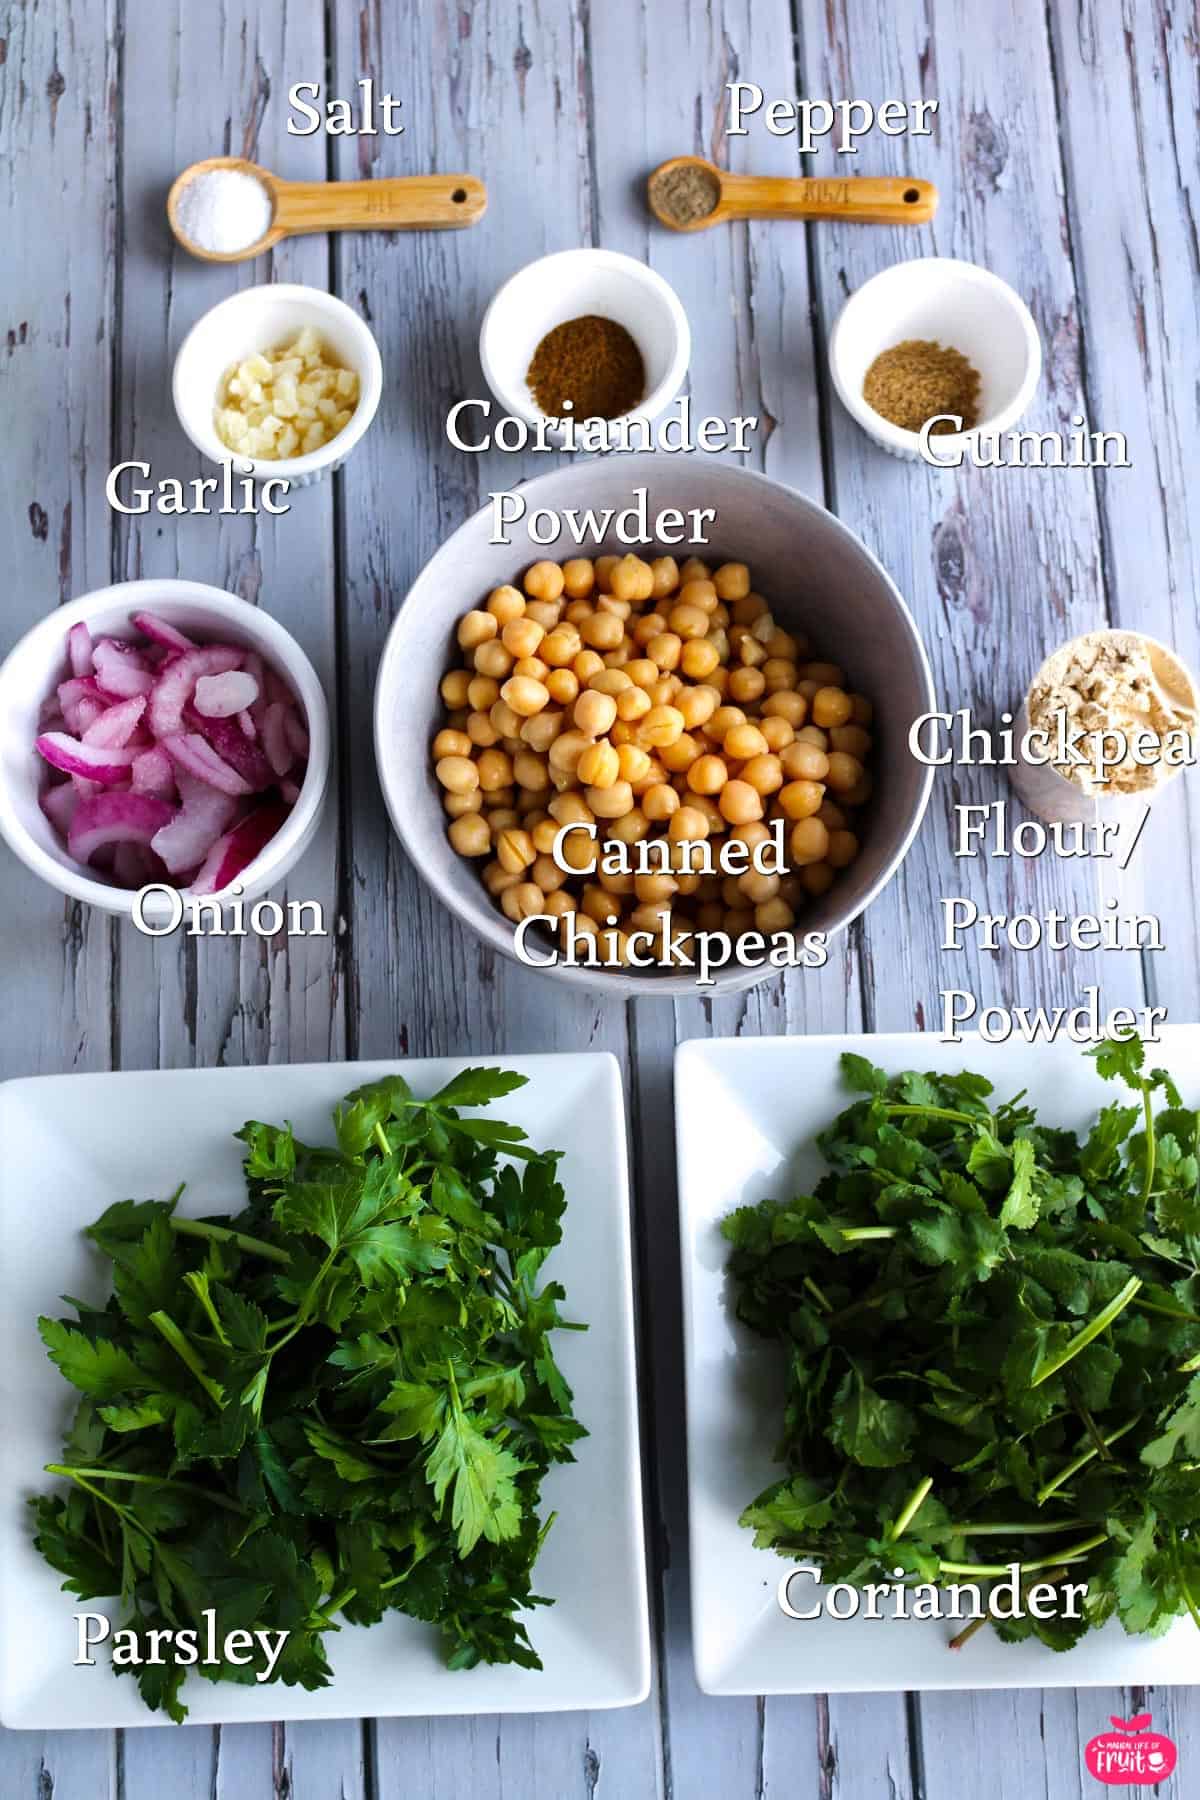 Ingredients for Middle East Falafel Recipe,salt, pepper, garlic, coriander powder, cumin, chickpea flour, canned chickpeas, onion, parsley, coriander.